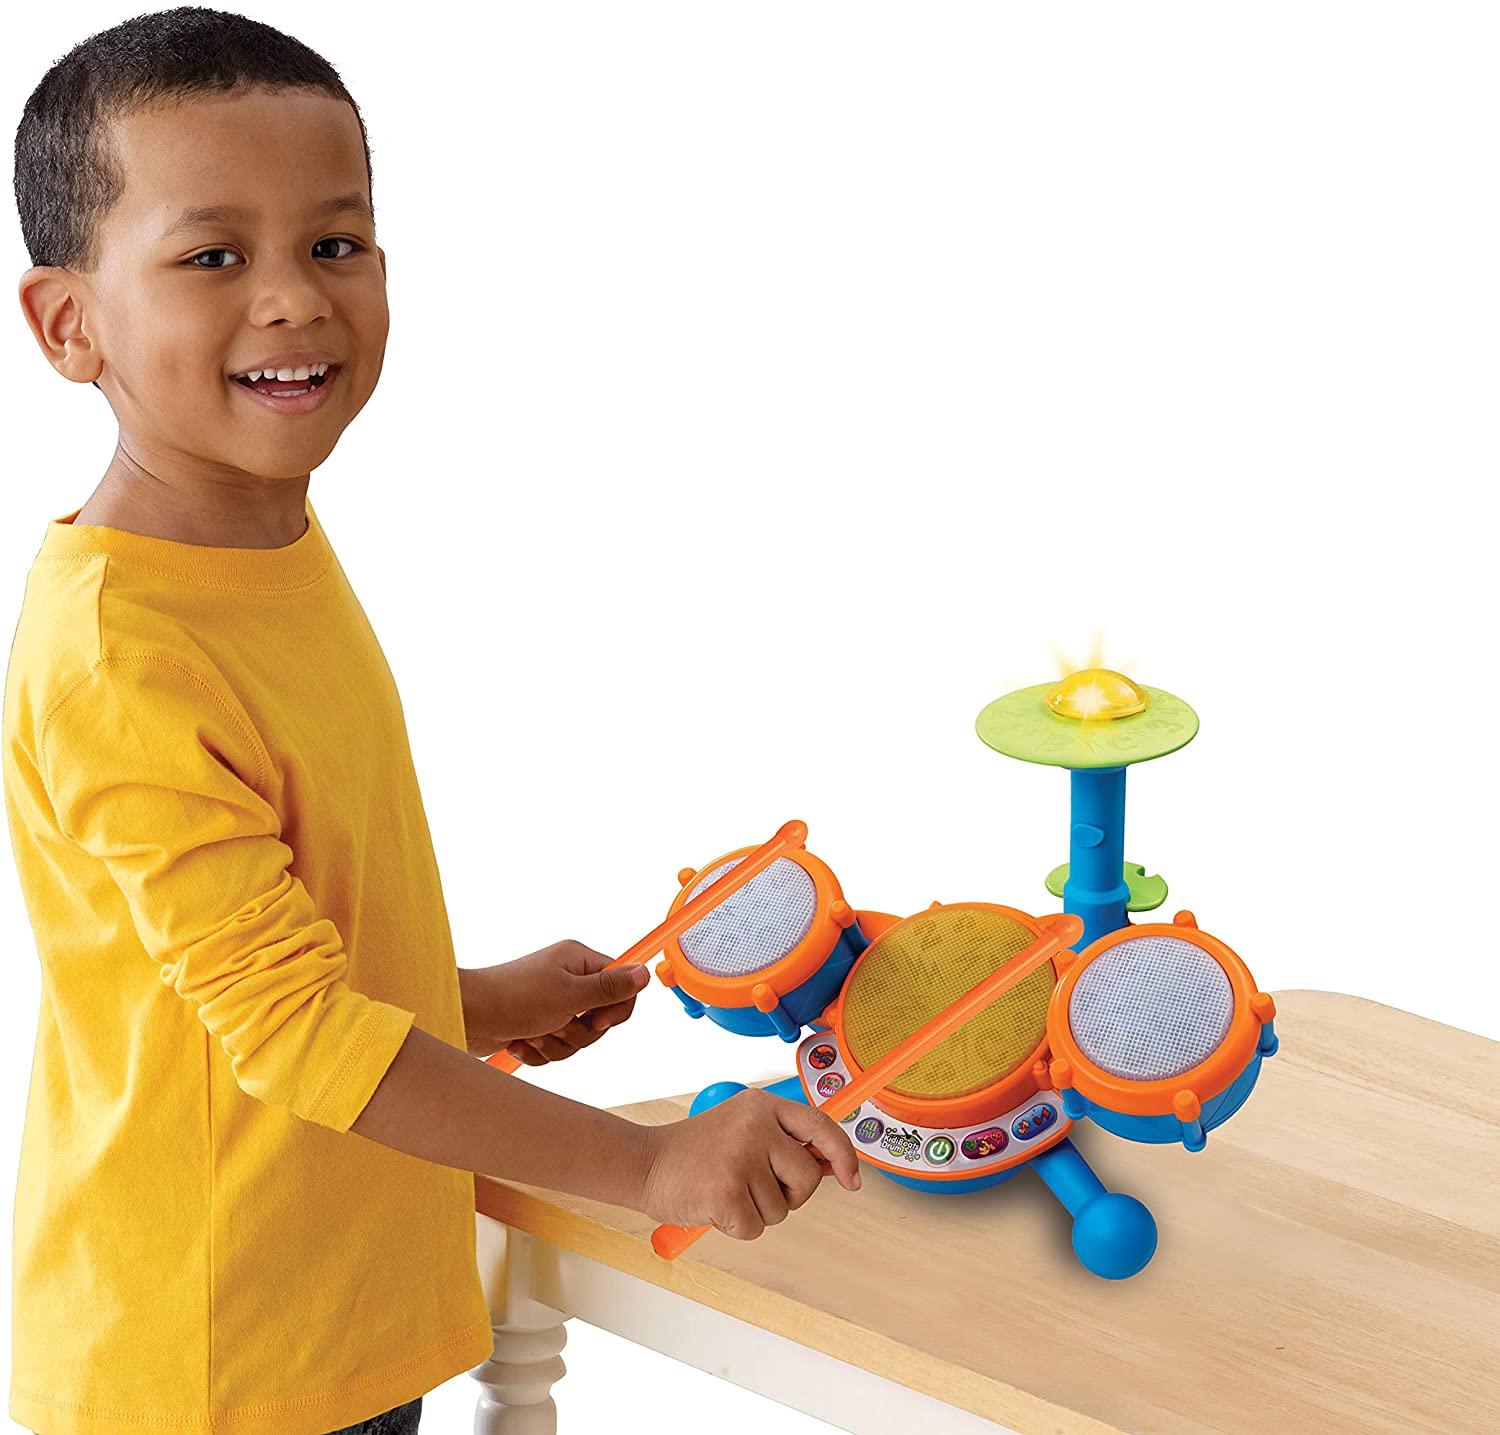 VTech KidiBeats Kids Drum Set, Orange - Educational Toy